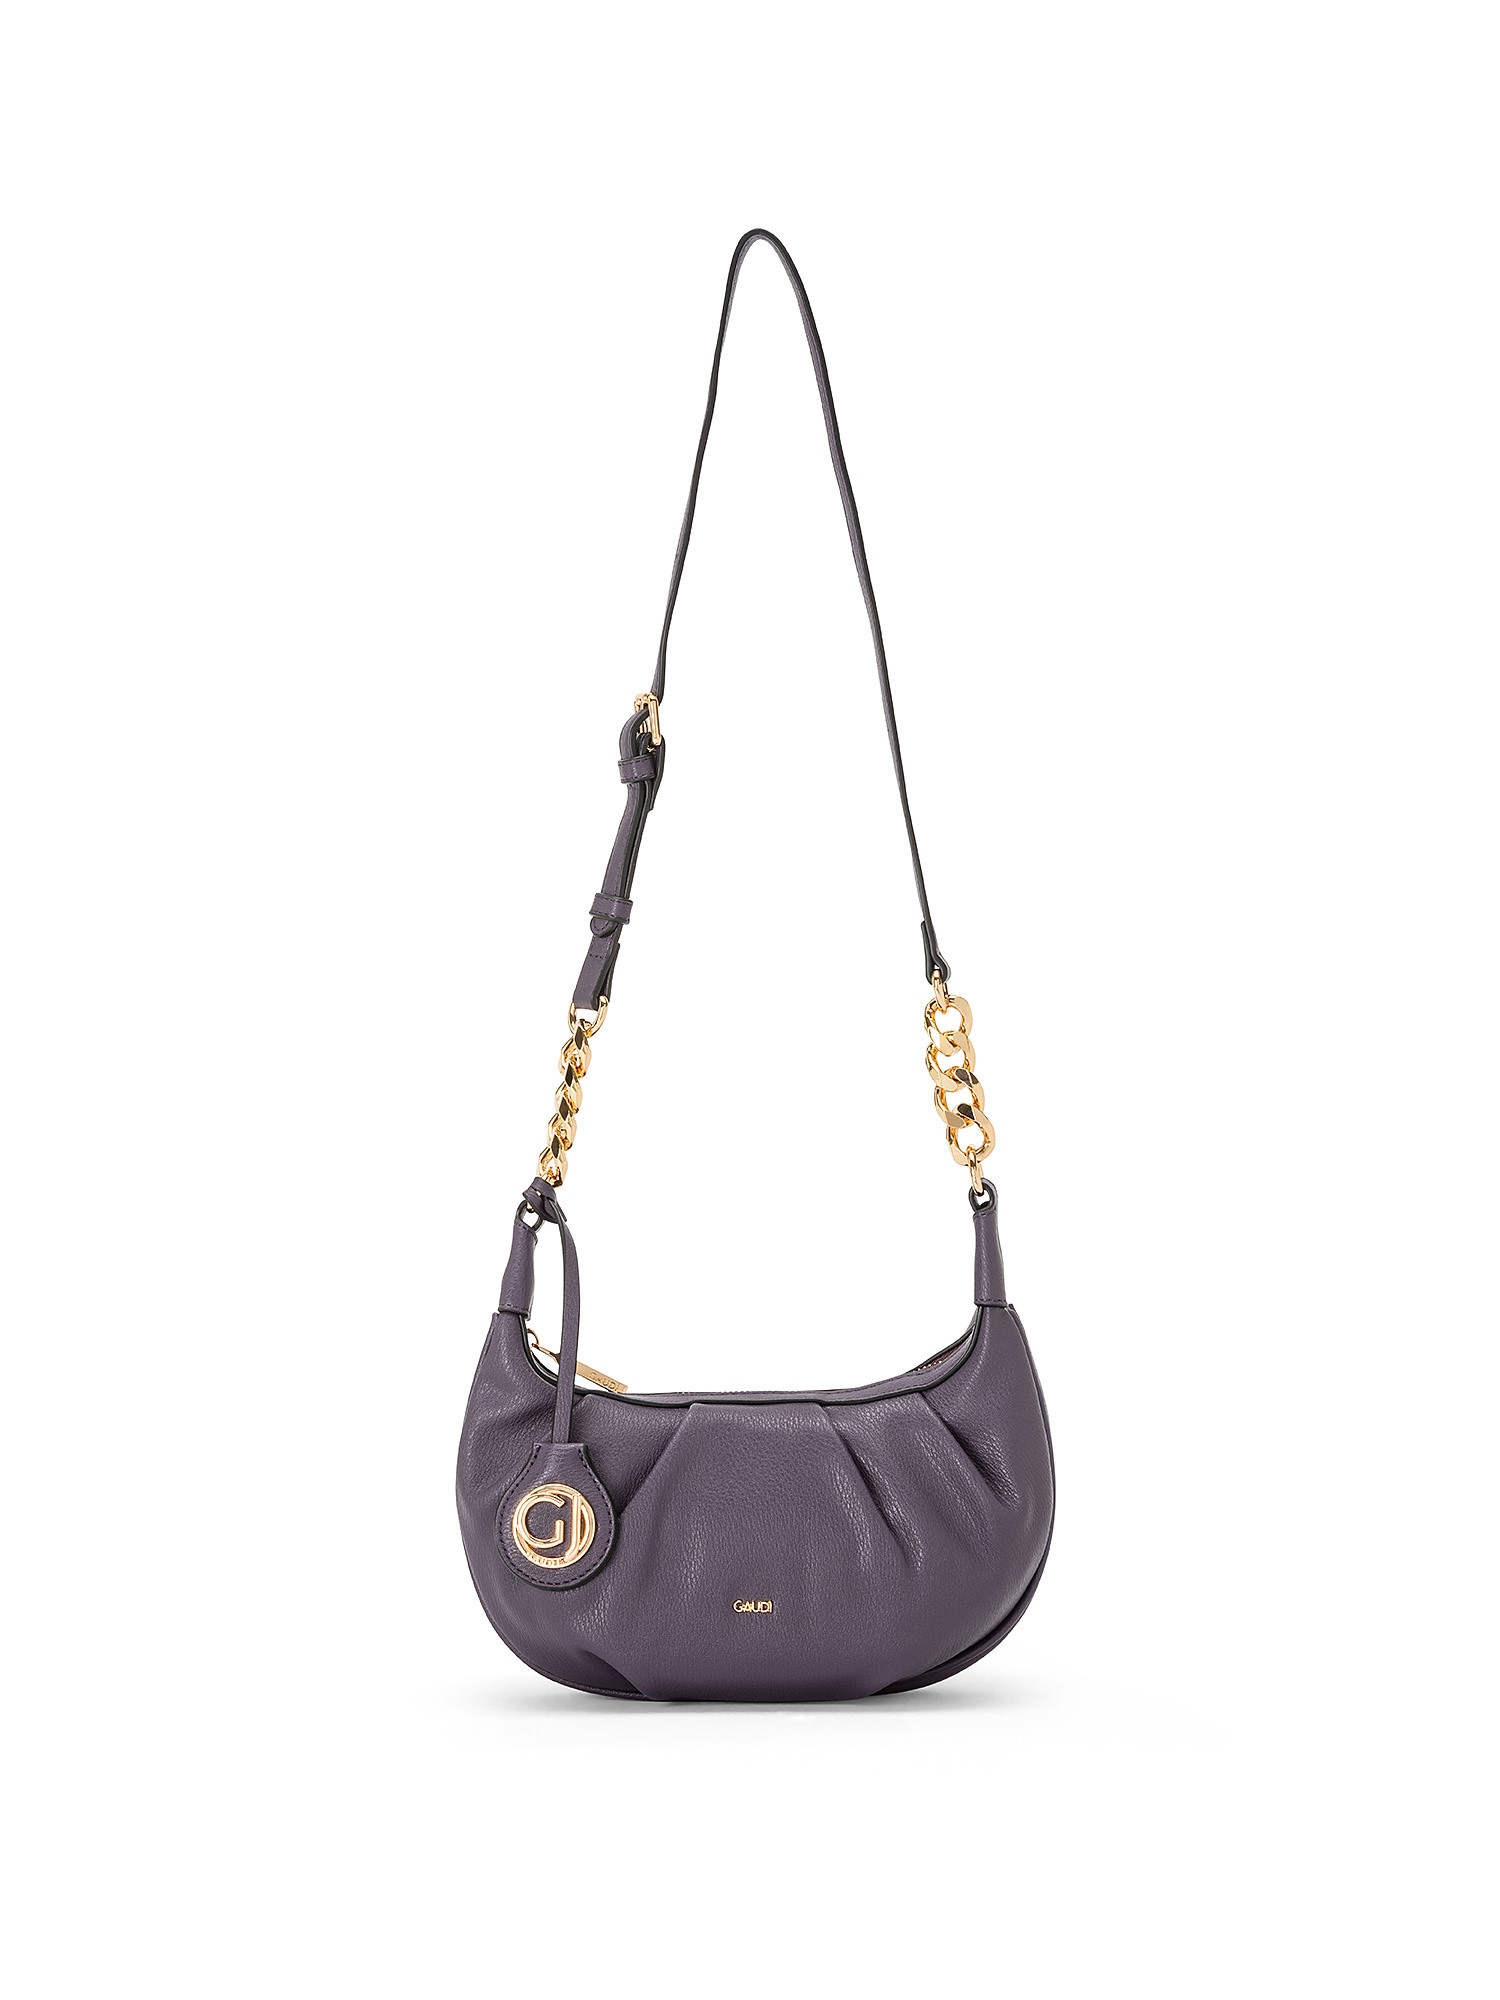 Gaudì - Iris shoulder bag, Purple, large image number 0